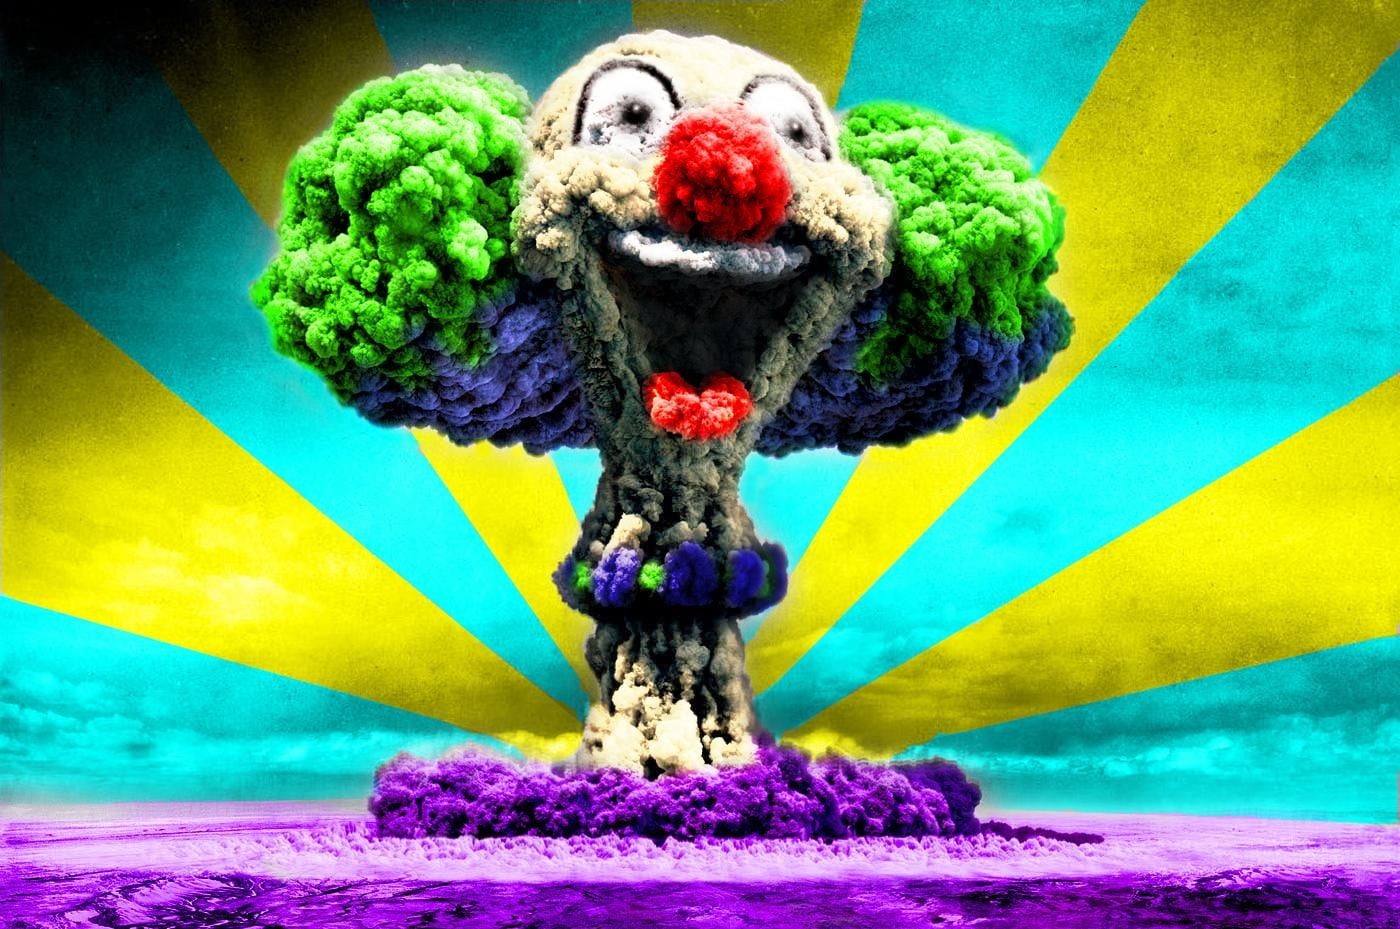 Clown mushroom cloud, clowns, explosion, mushroom clouds, multi colored